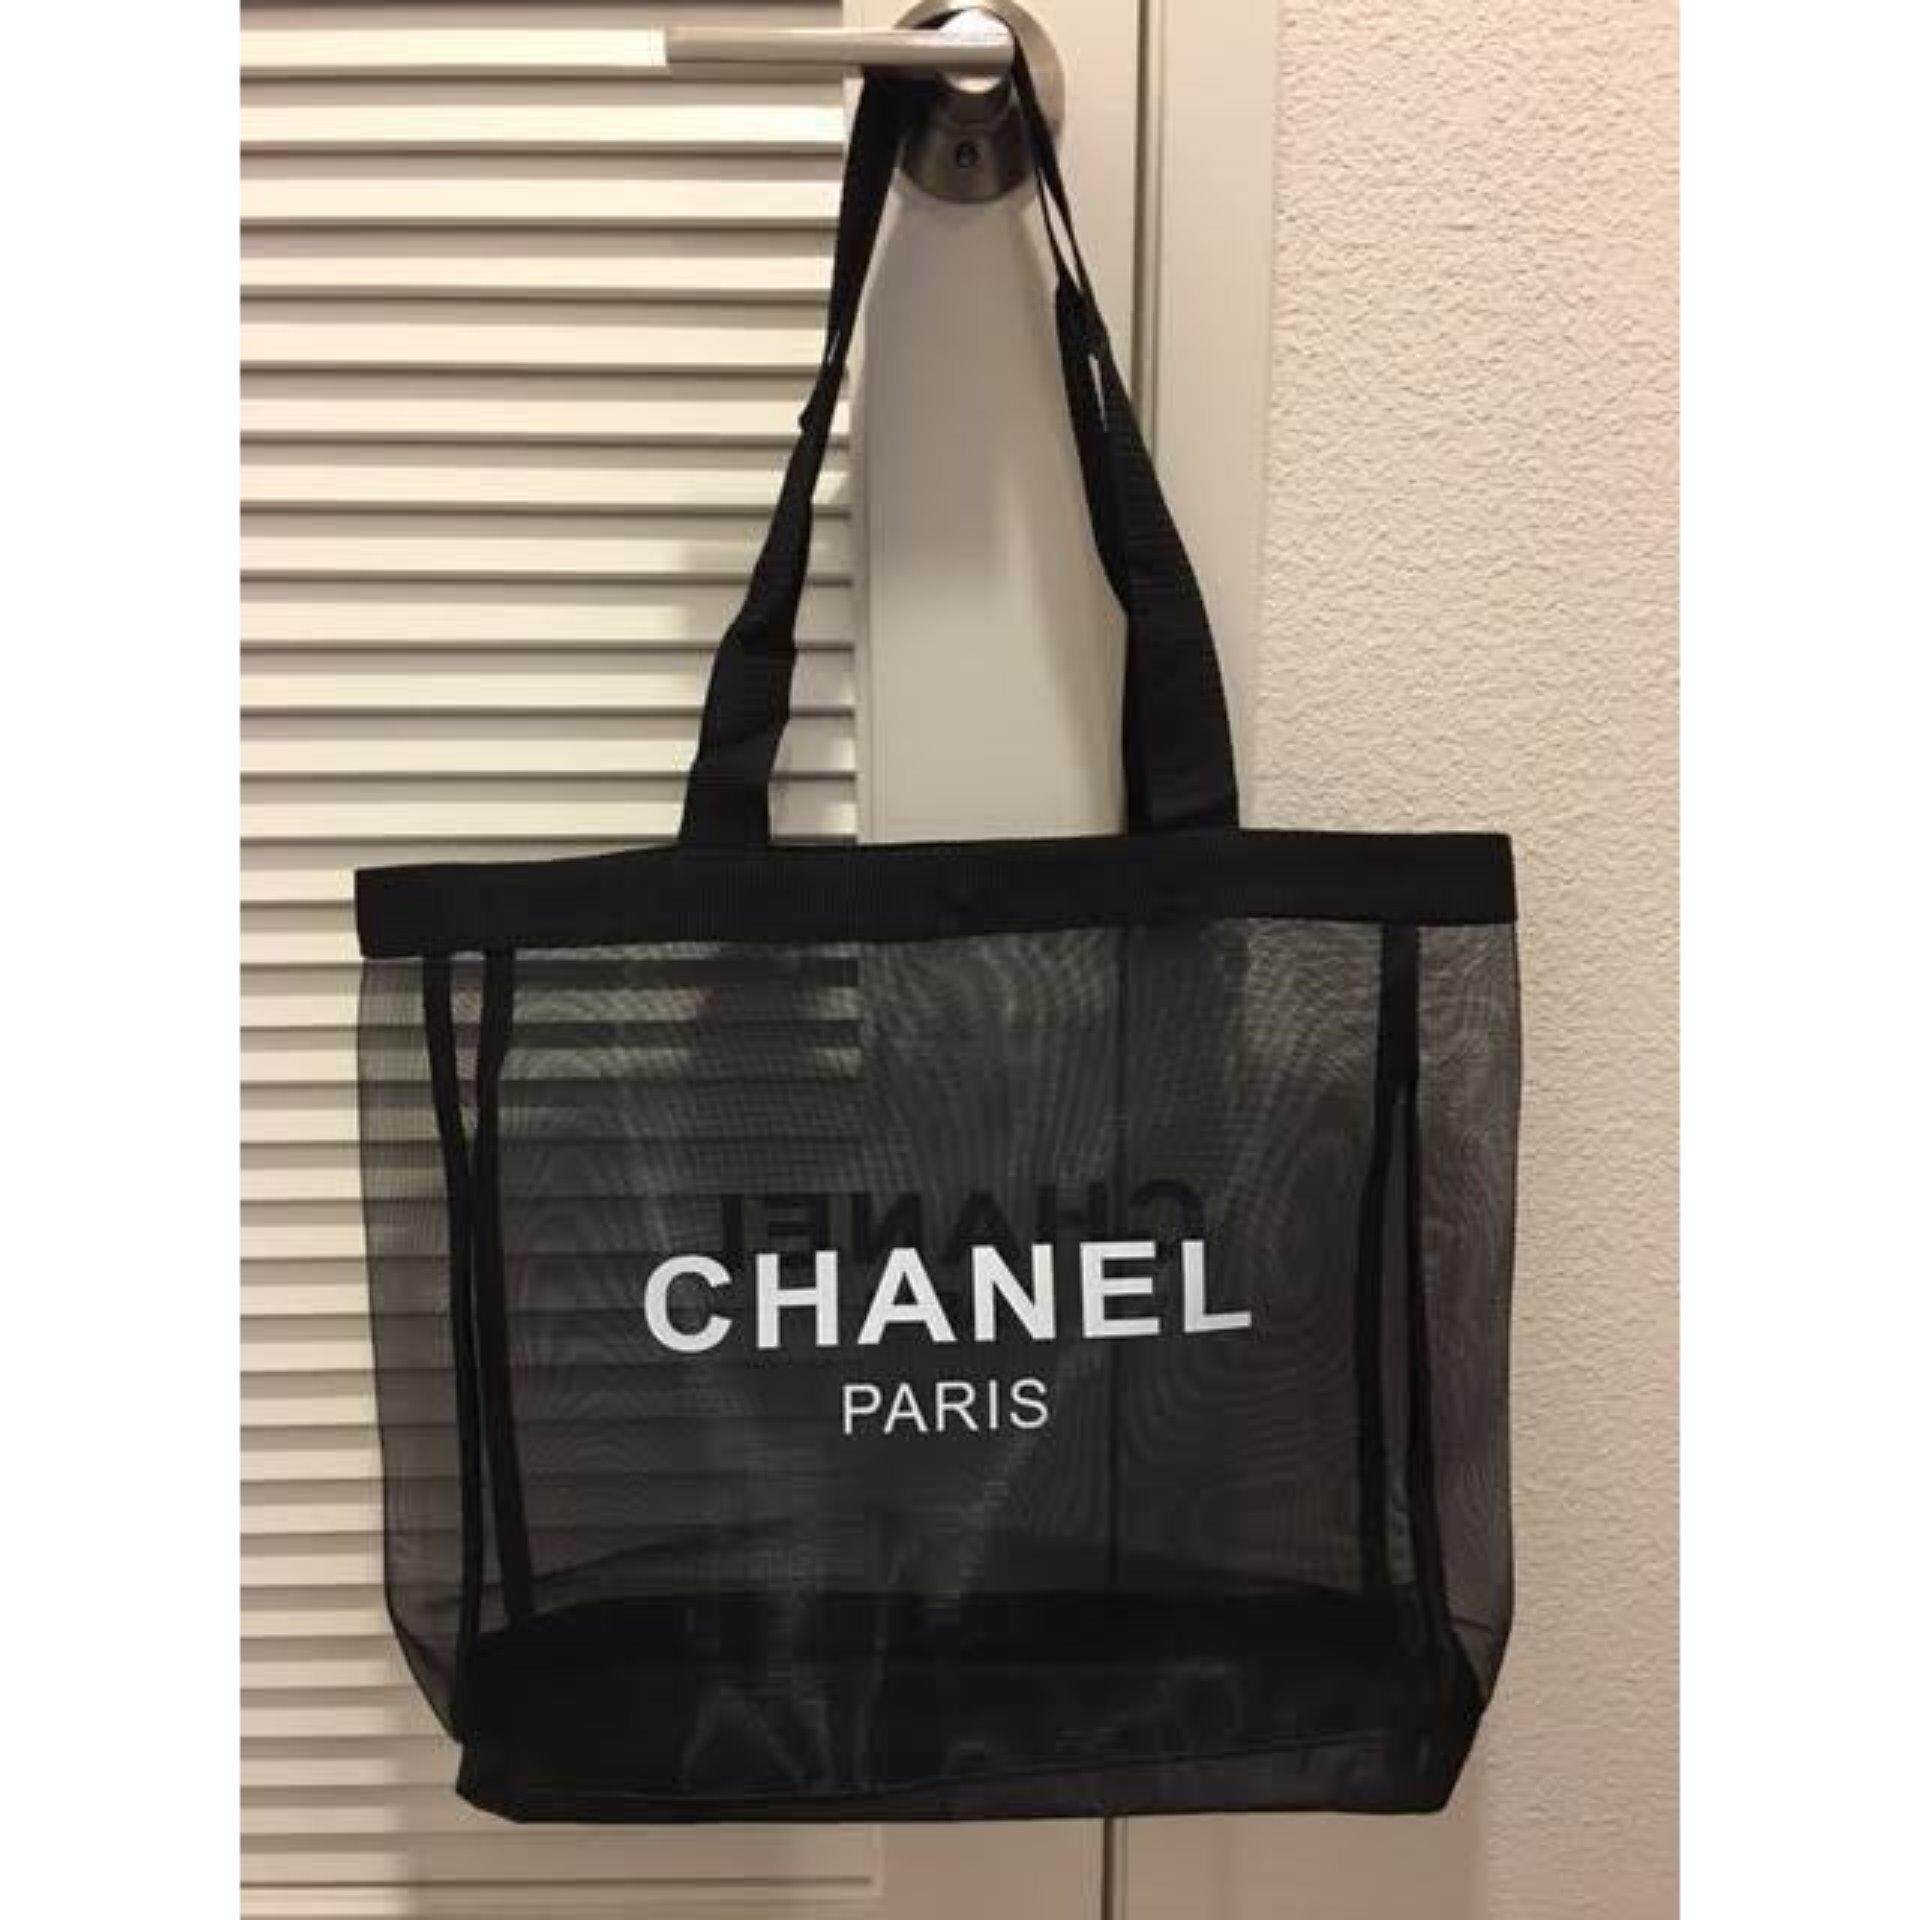 Chanel Gift Bag | Paul Smith